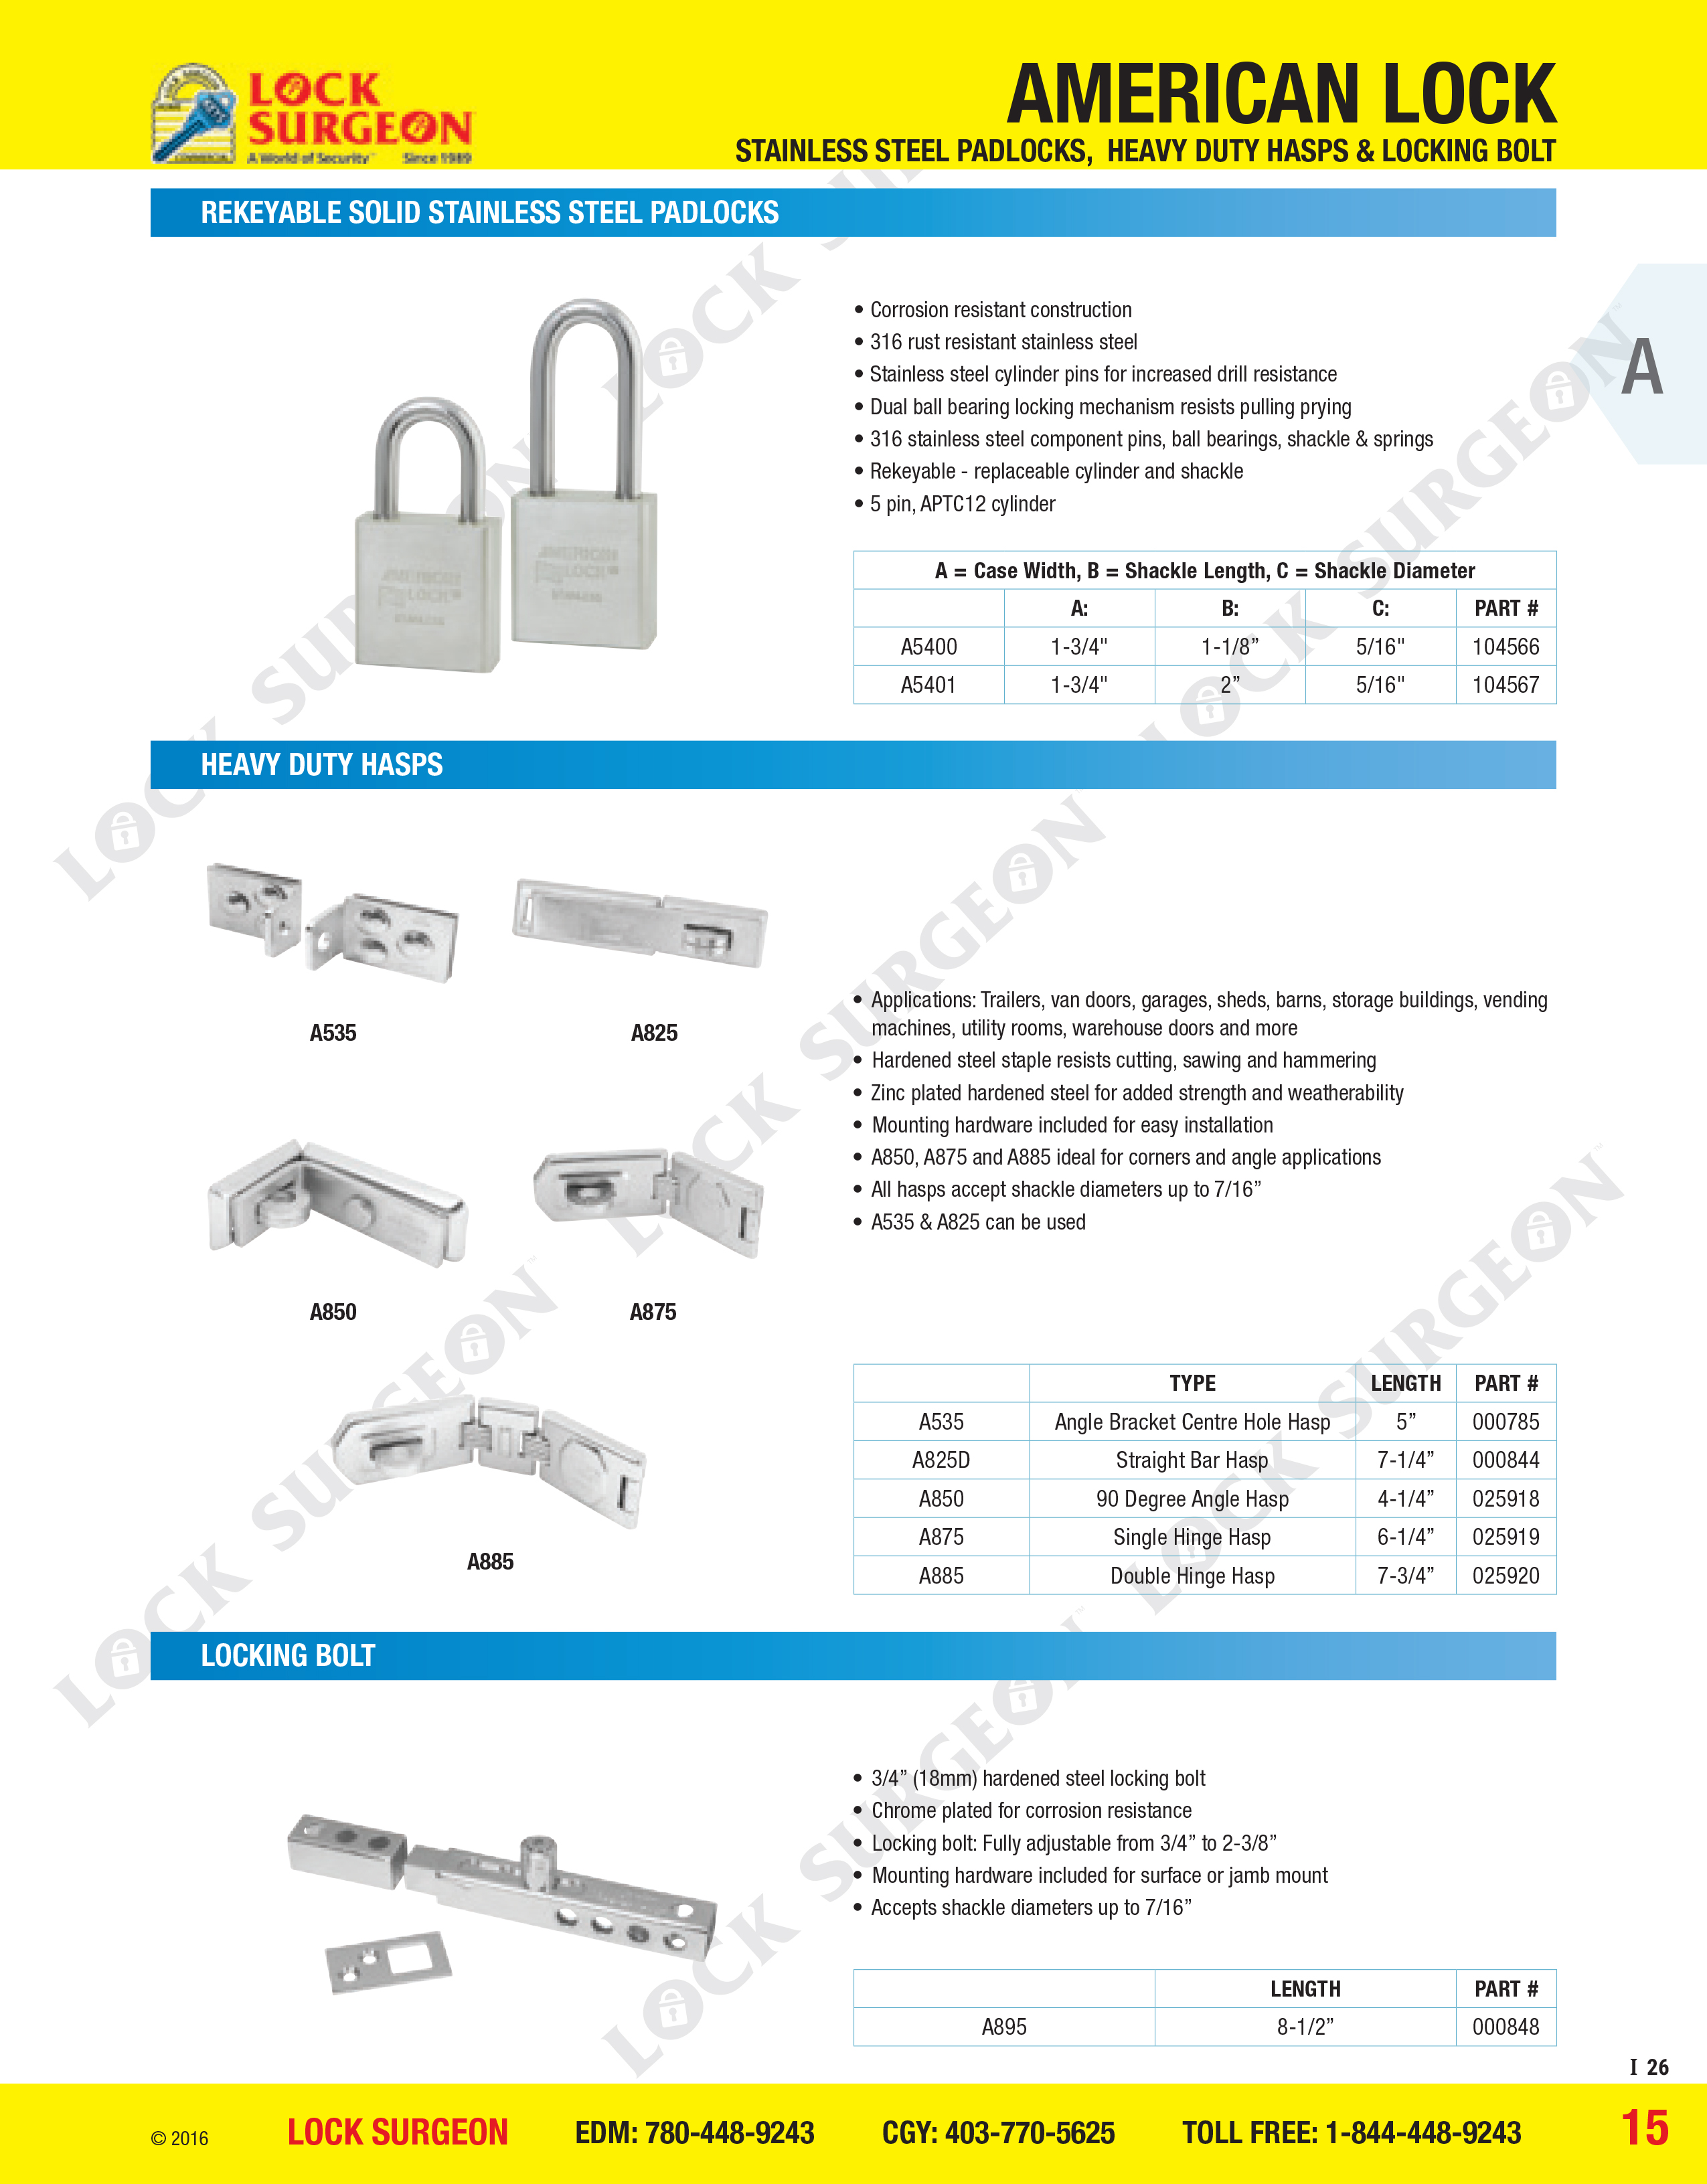 Acheson American Lock Rekeyable solid stainless steel padlocks, heavy duty hasps locking bolts.